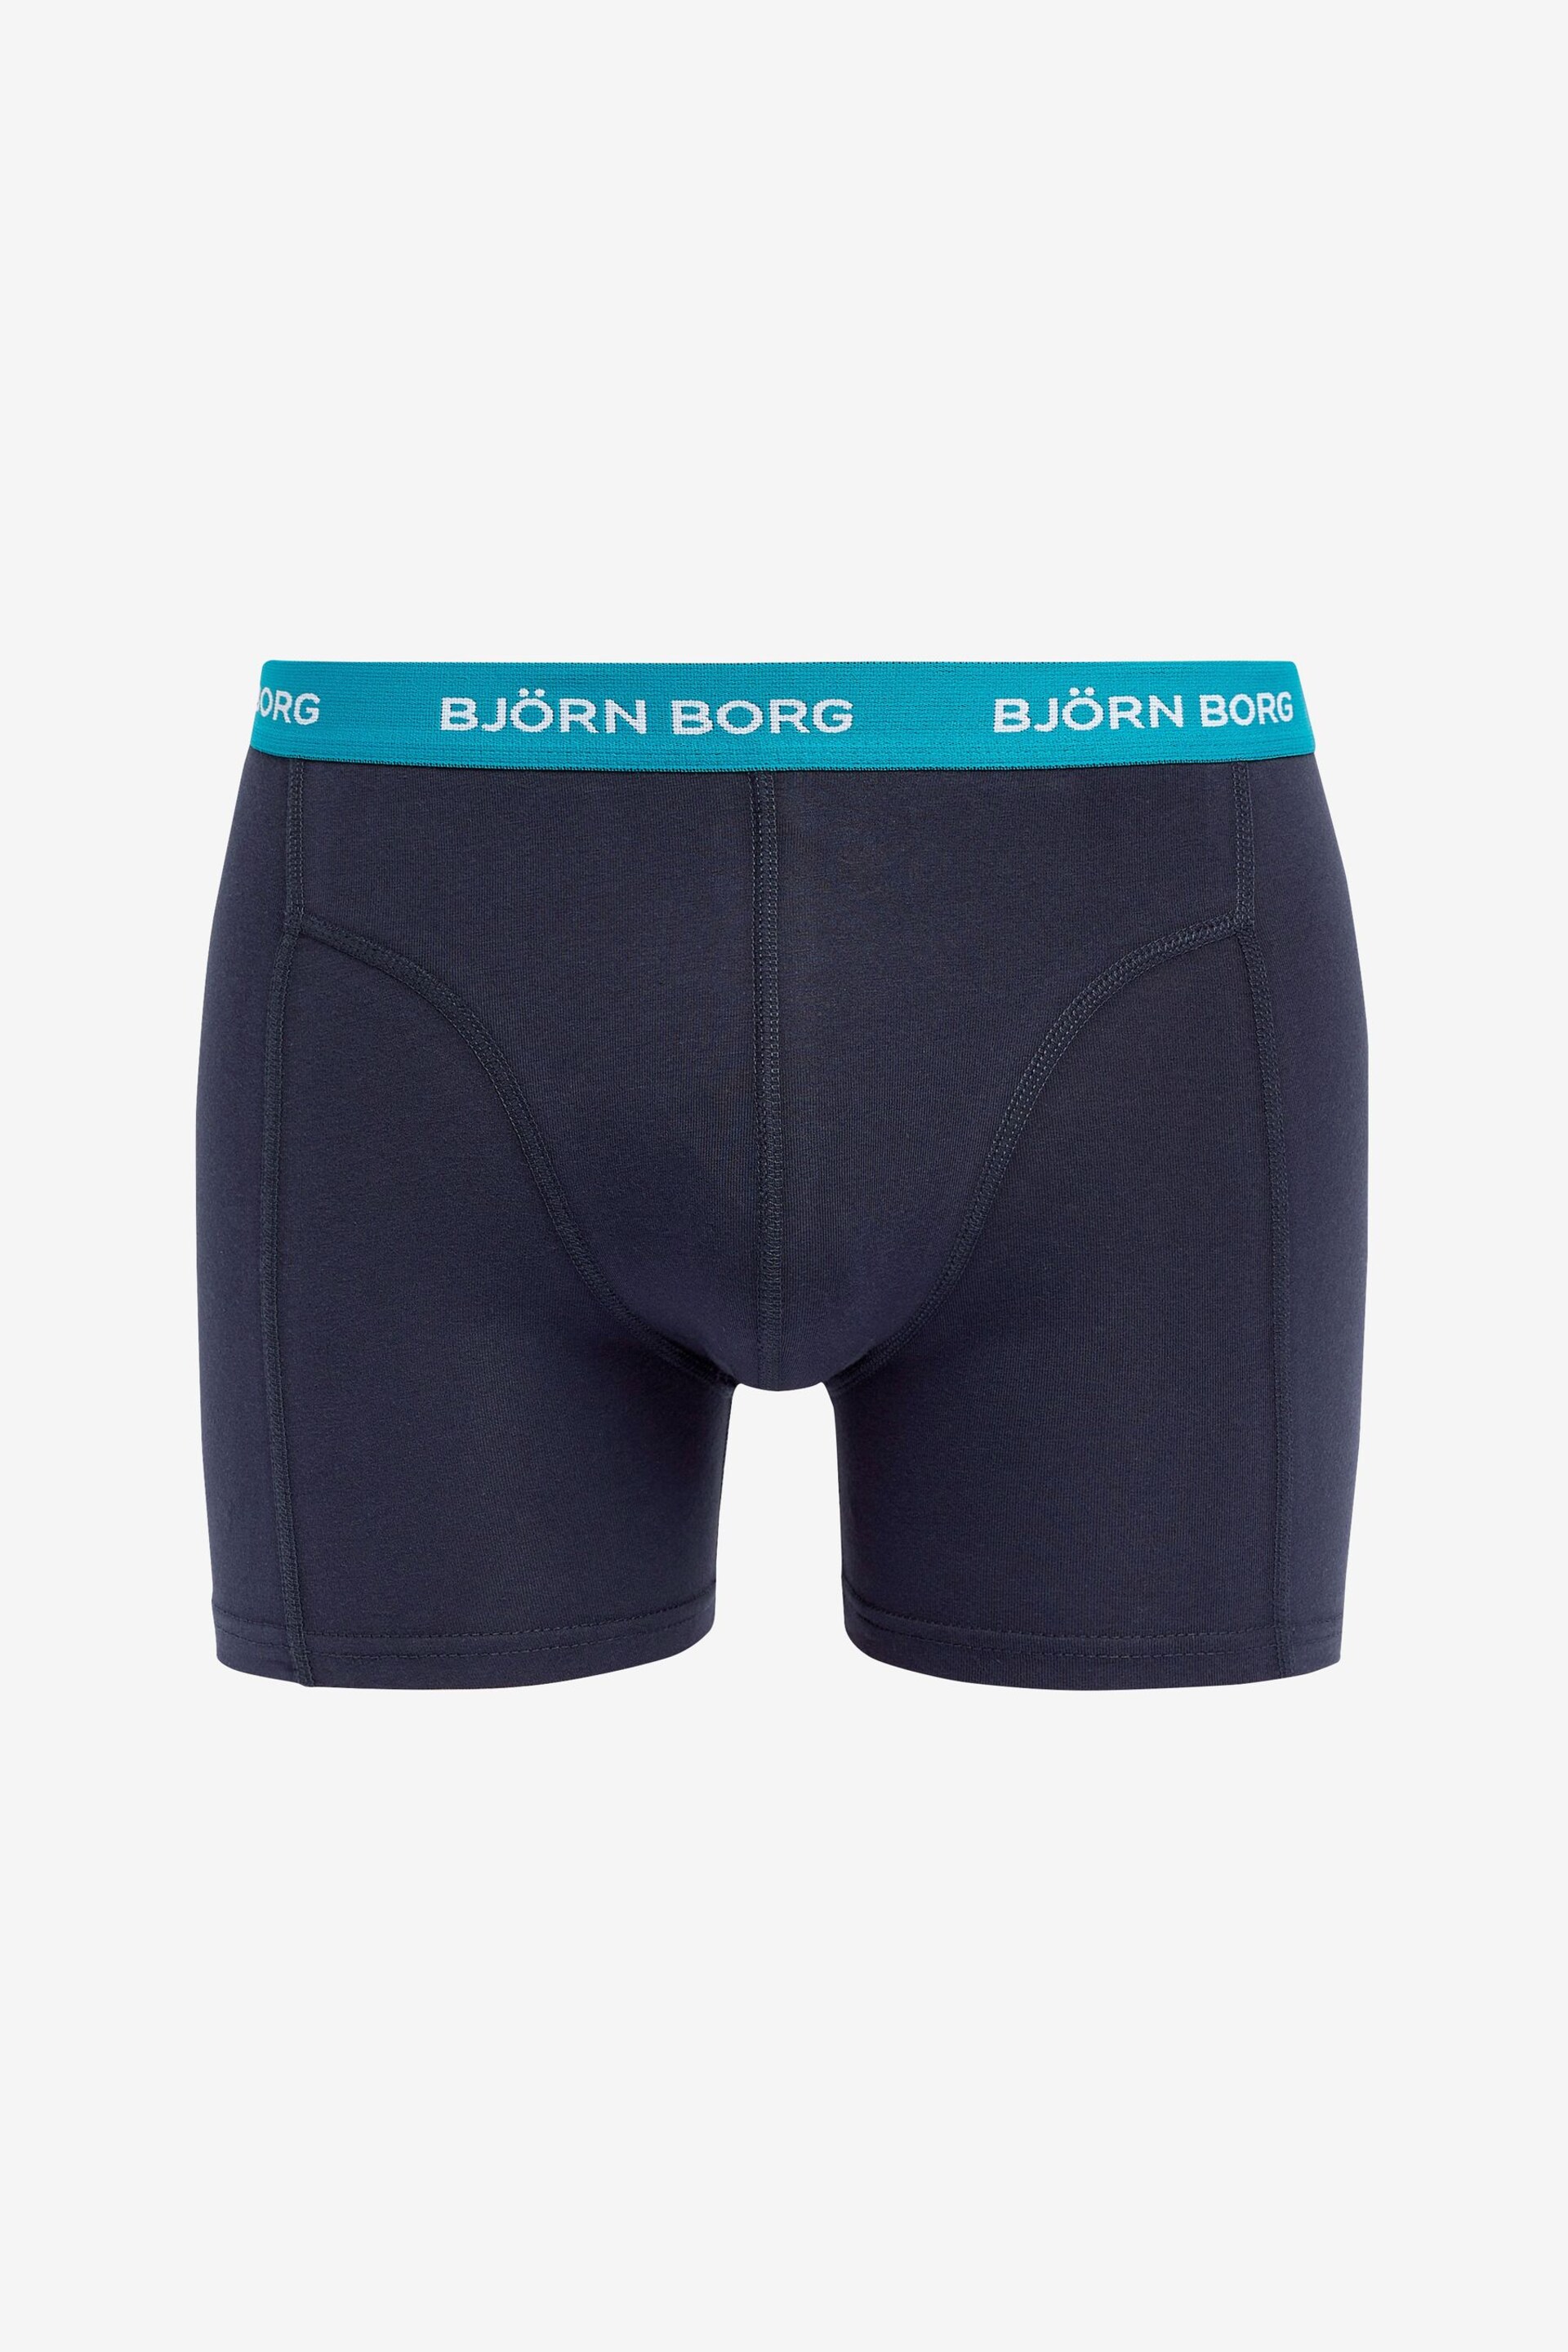 Bjorn Borg Black Cotton Stretch Boxer 5 Pack - Image 5 of 6